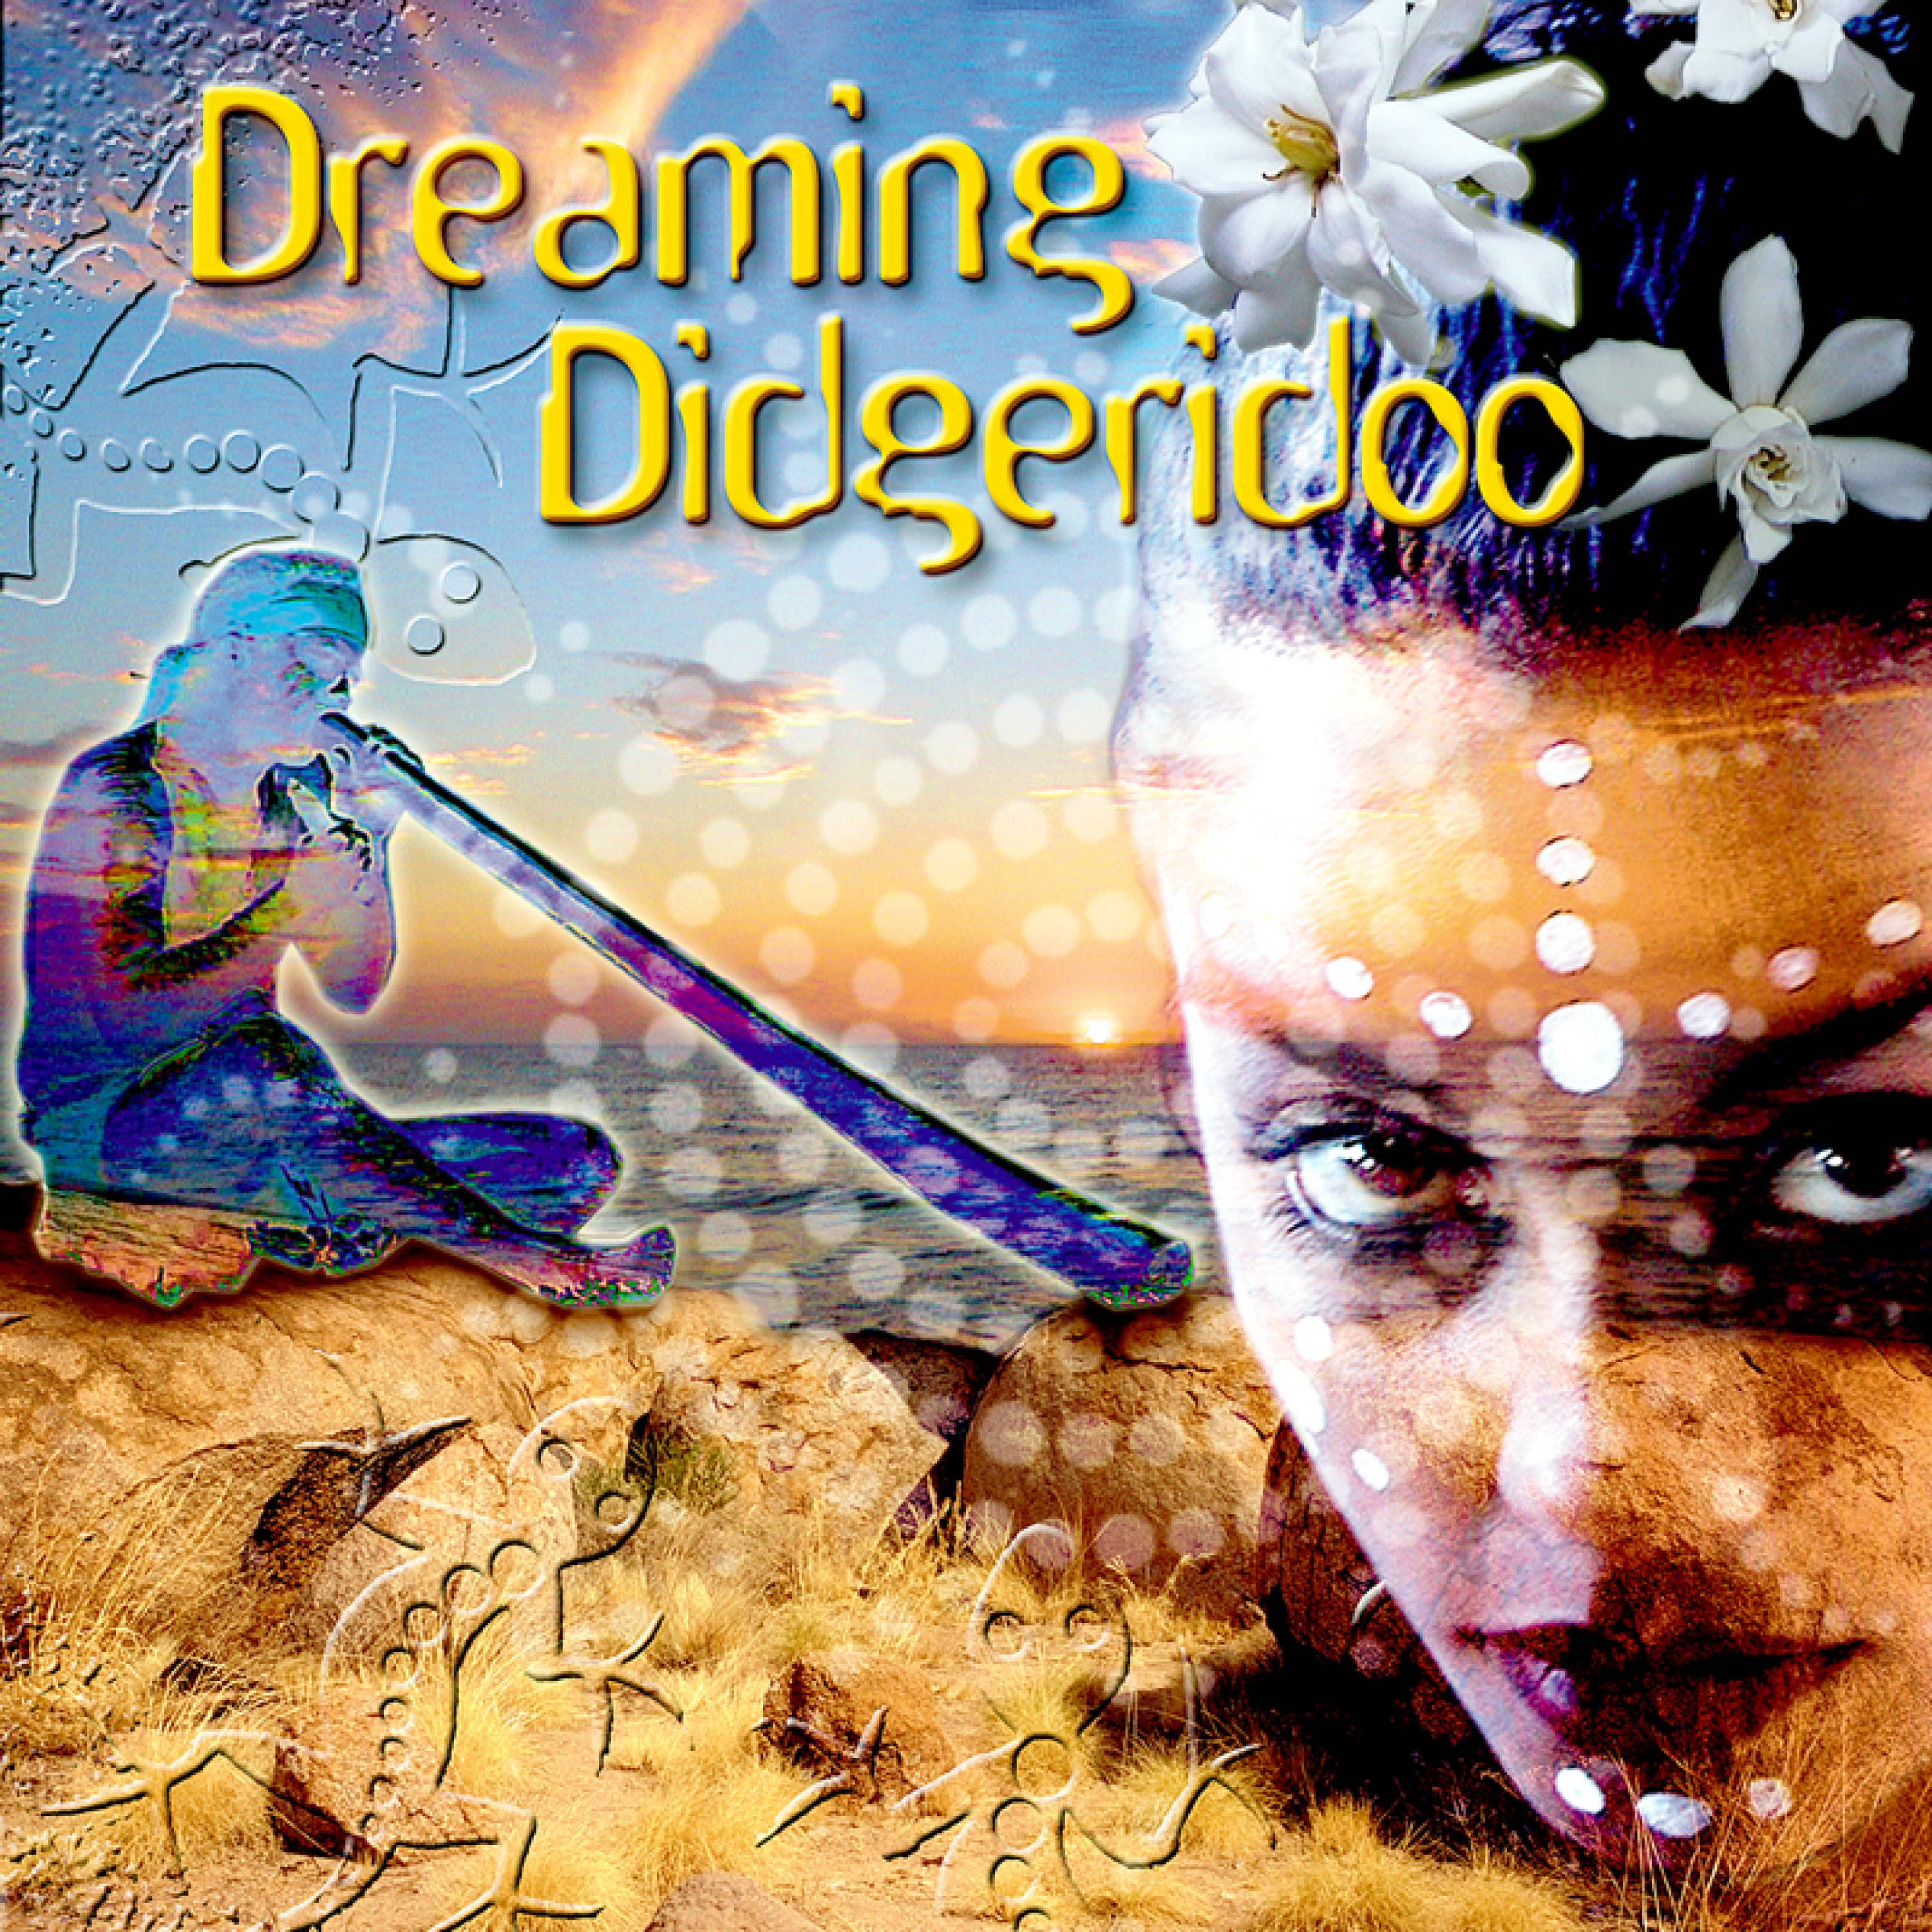 Dreaming Didgeridoo